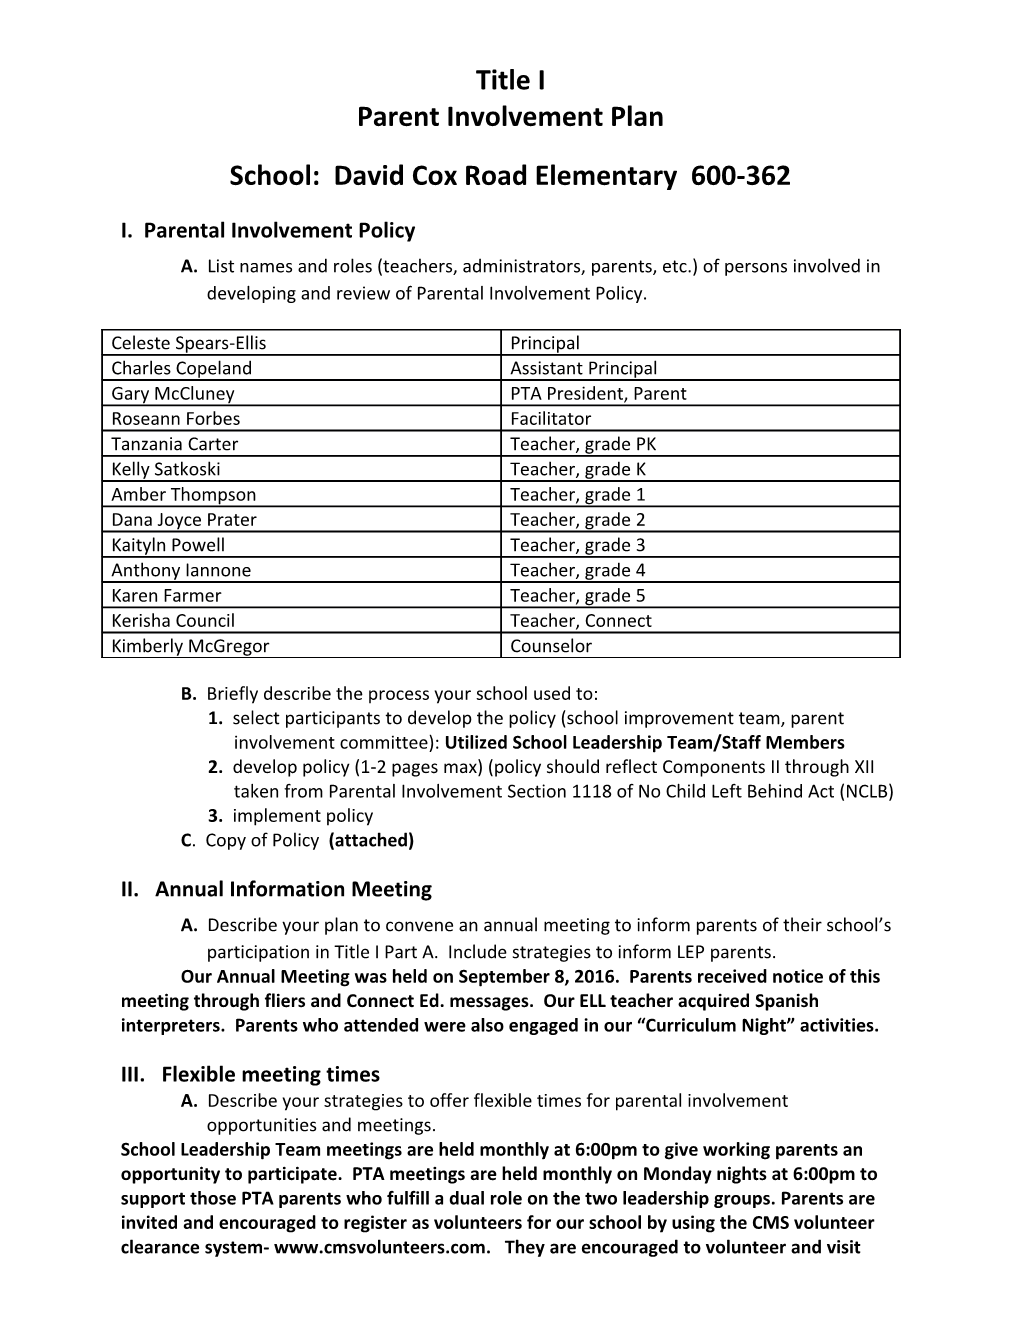 School: David Cox Road Elementary 600-362